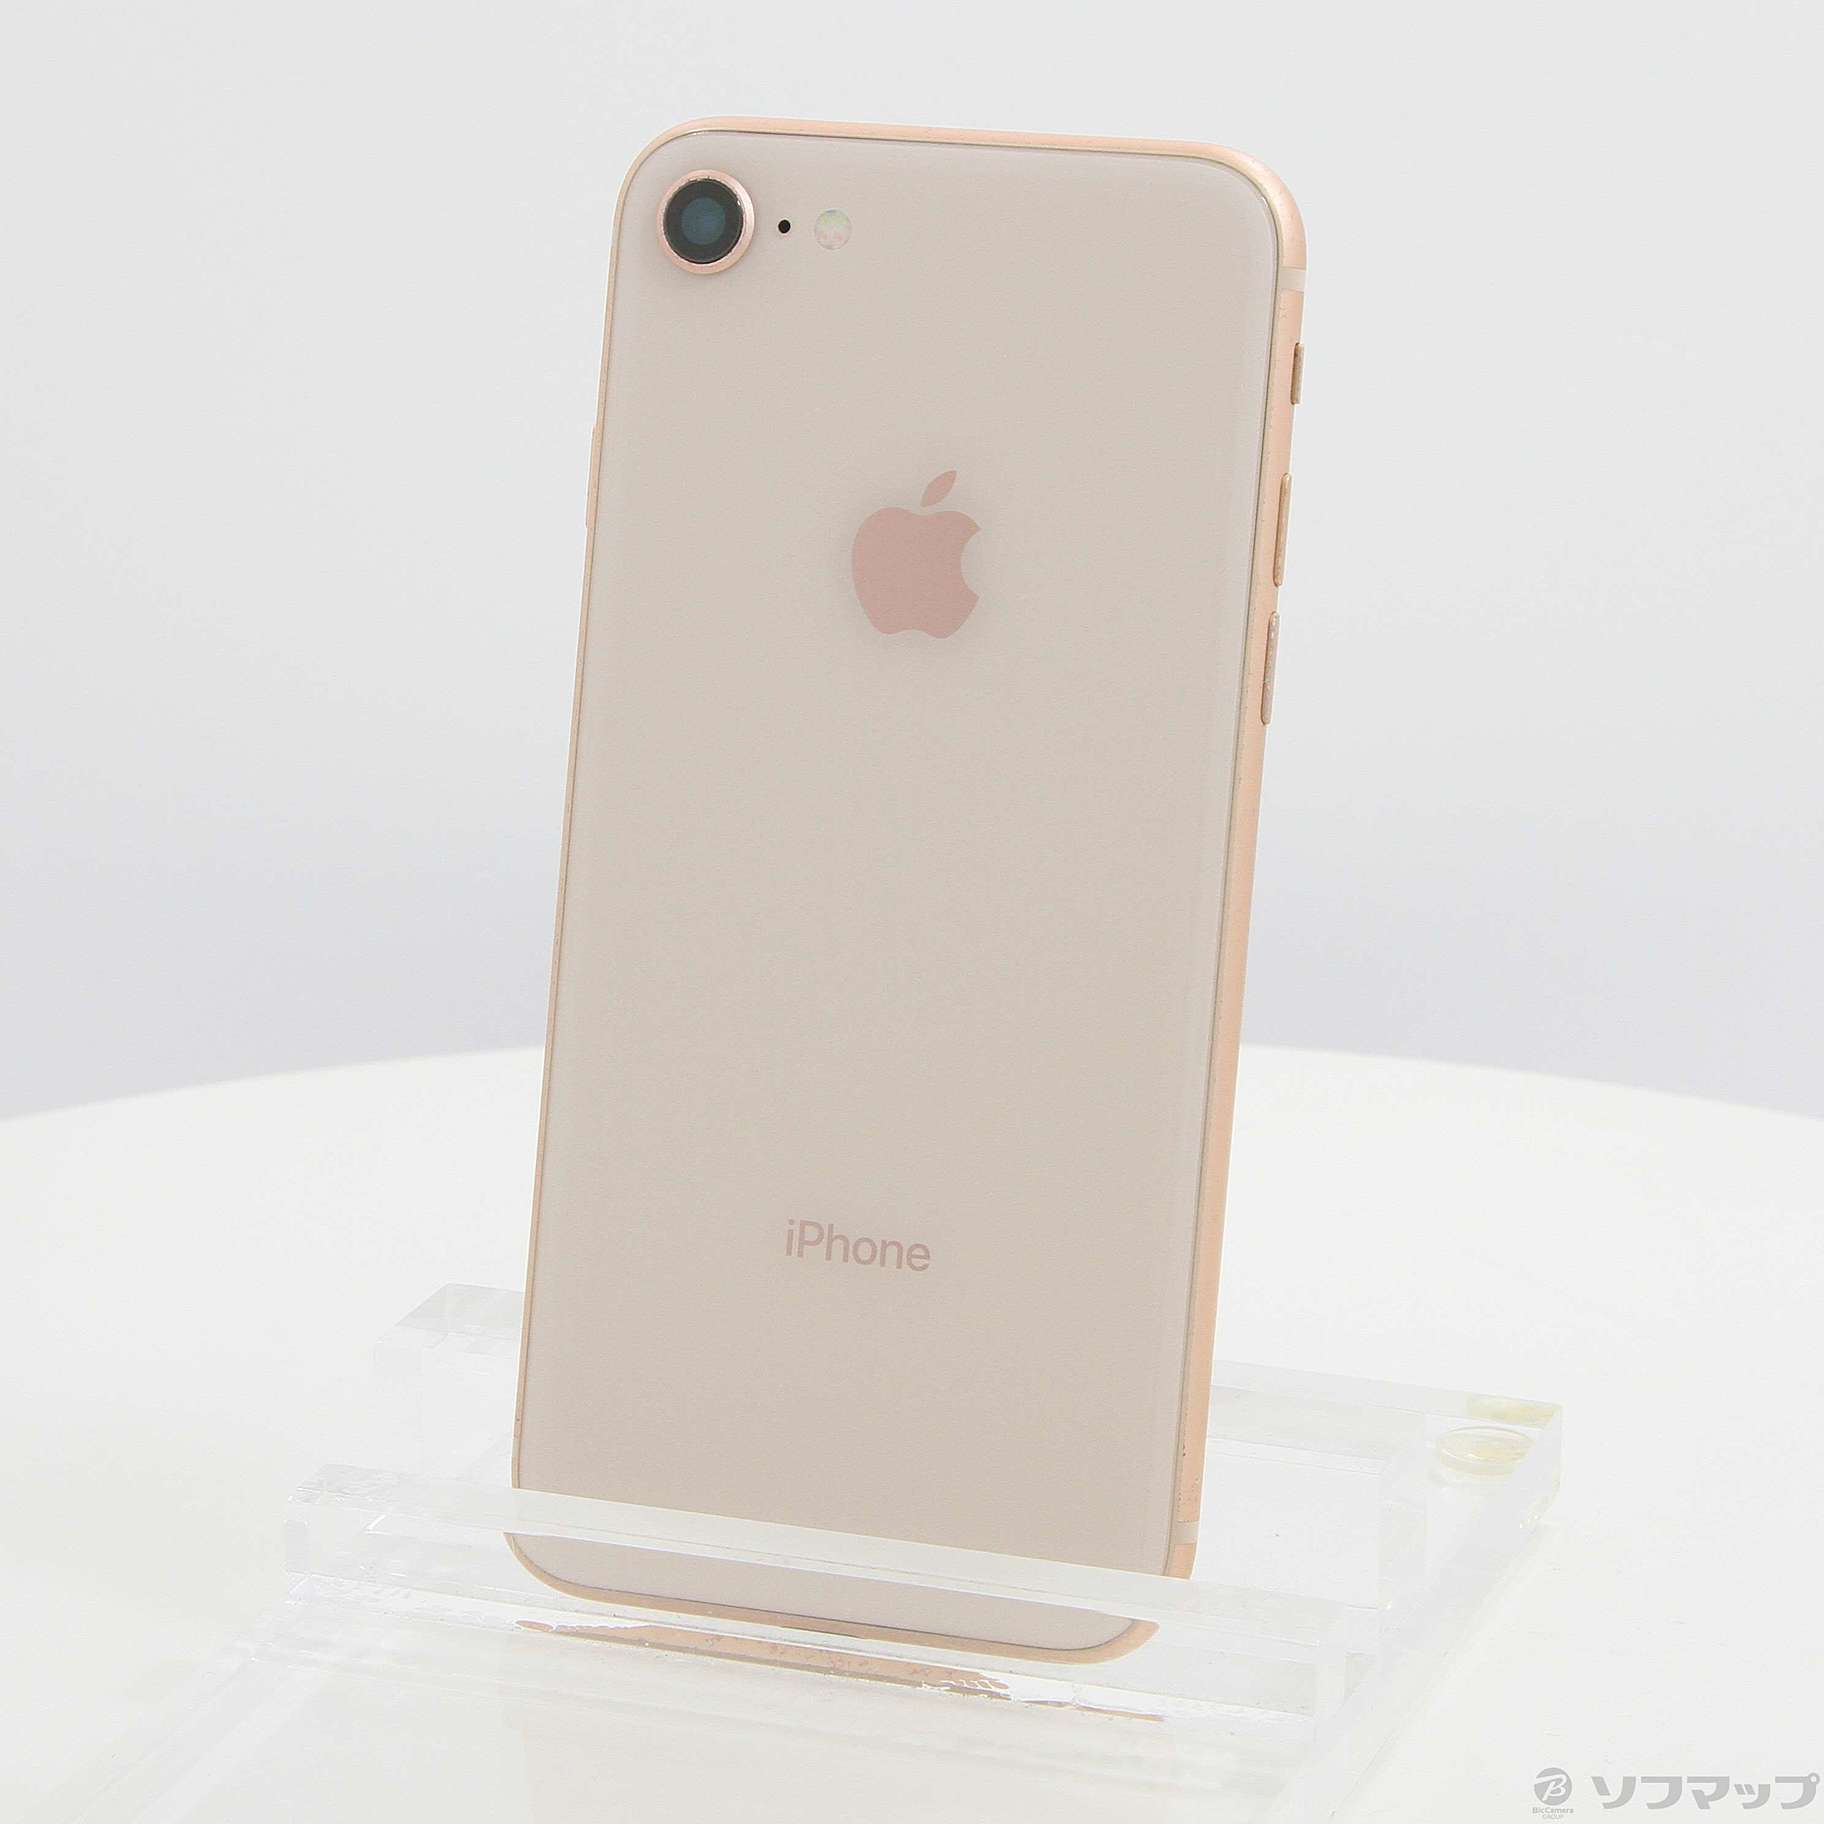 iPhone 7 Gold 256 GB Softbank - スマートフォン本体